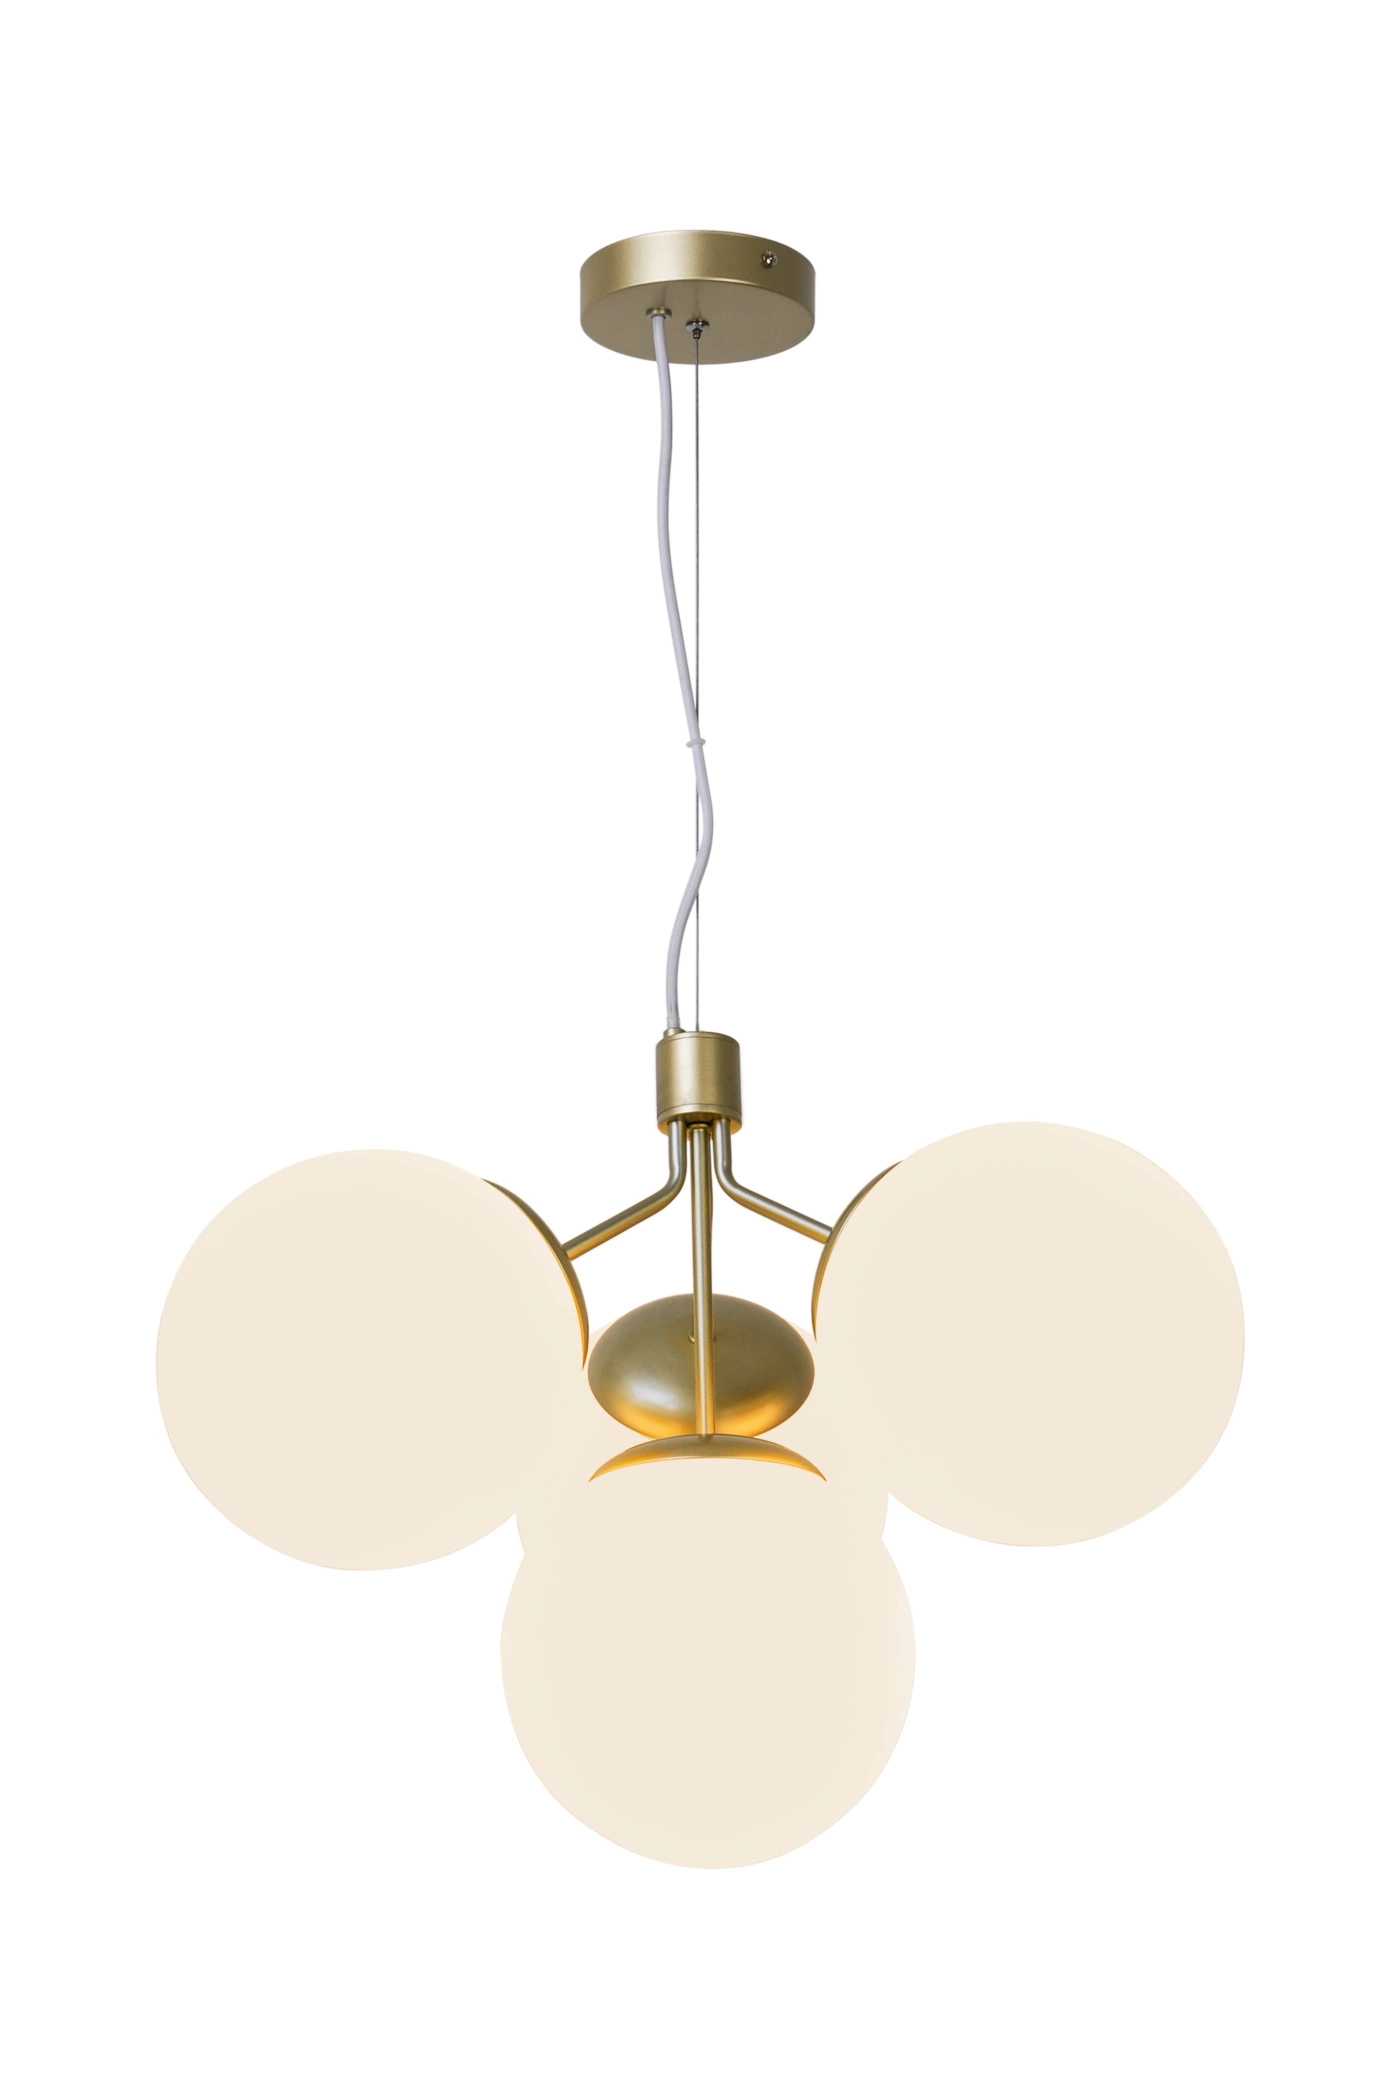   
                        
                        Люстра NORDLUX (Дания) 51238    
                         в стиле Модерн.  
                        Тип источника света: светодиодная лампа, сменная.                         Форма: Круг.                         Цвета плафонов и подвесок: Белый.                         Материал: Стекло.                          фото 1